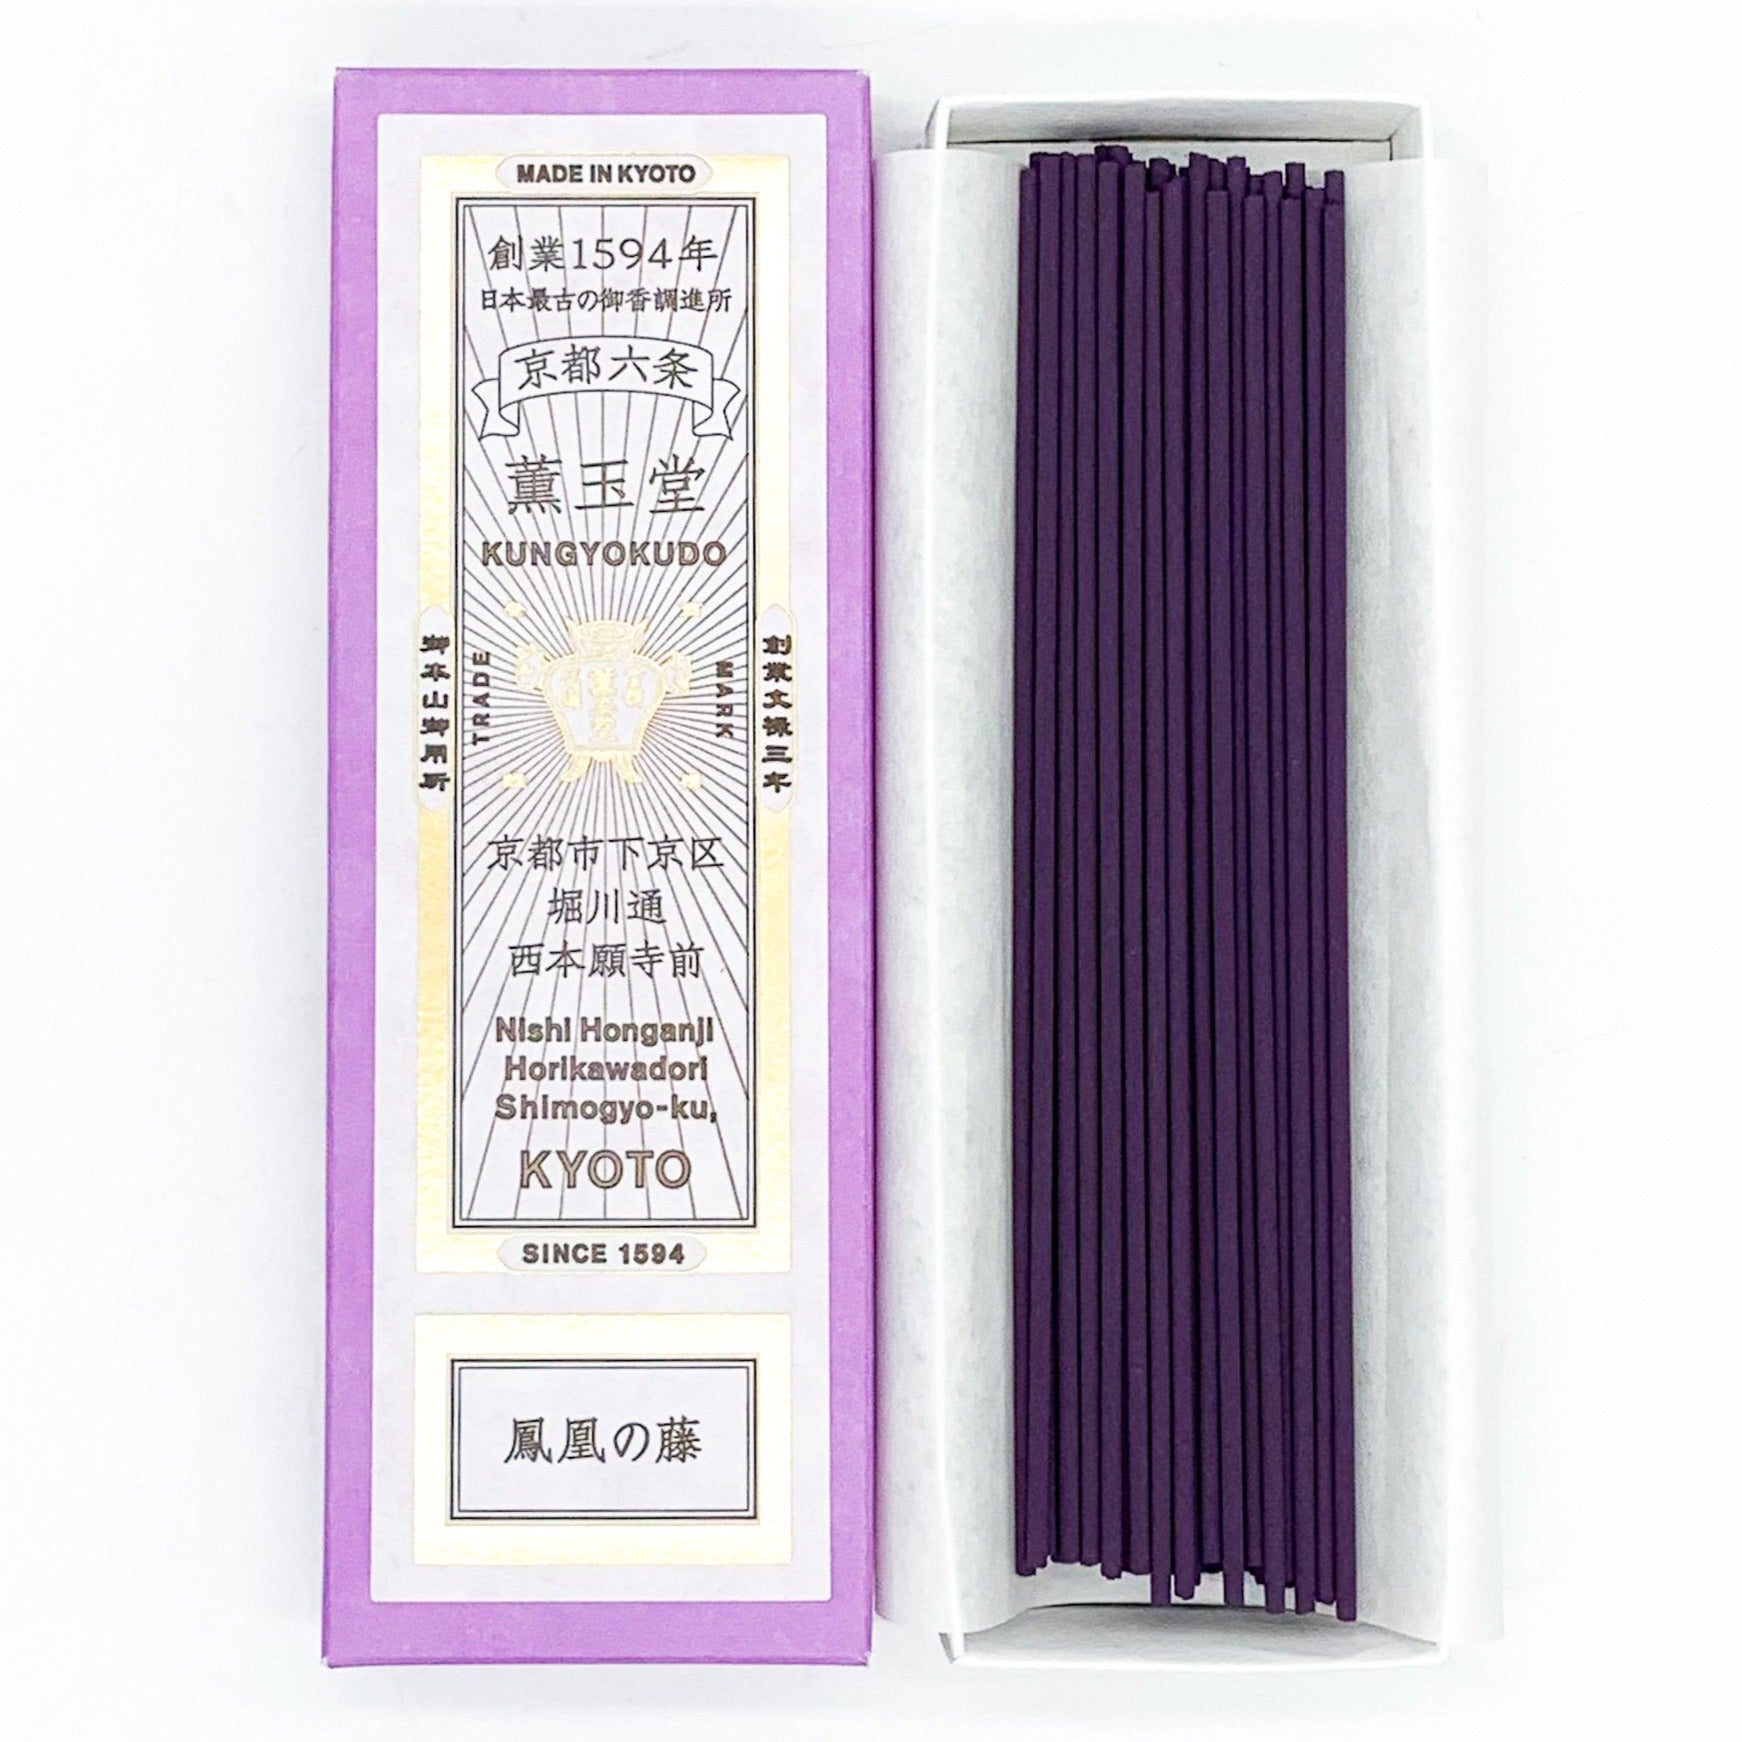 Kungyokudo Incense Sticks in Paper Box - Phoenix Wisteria